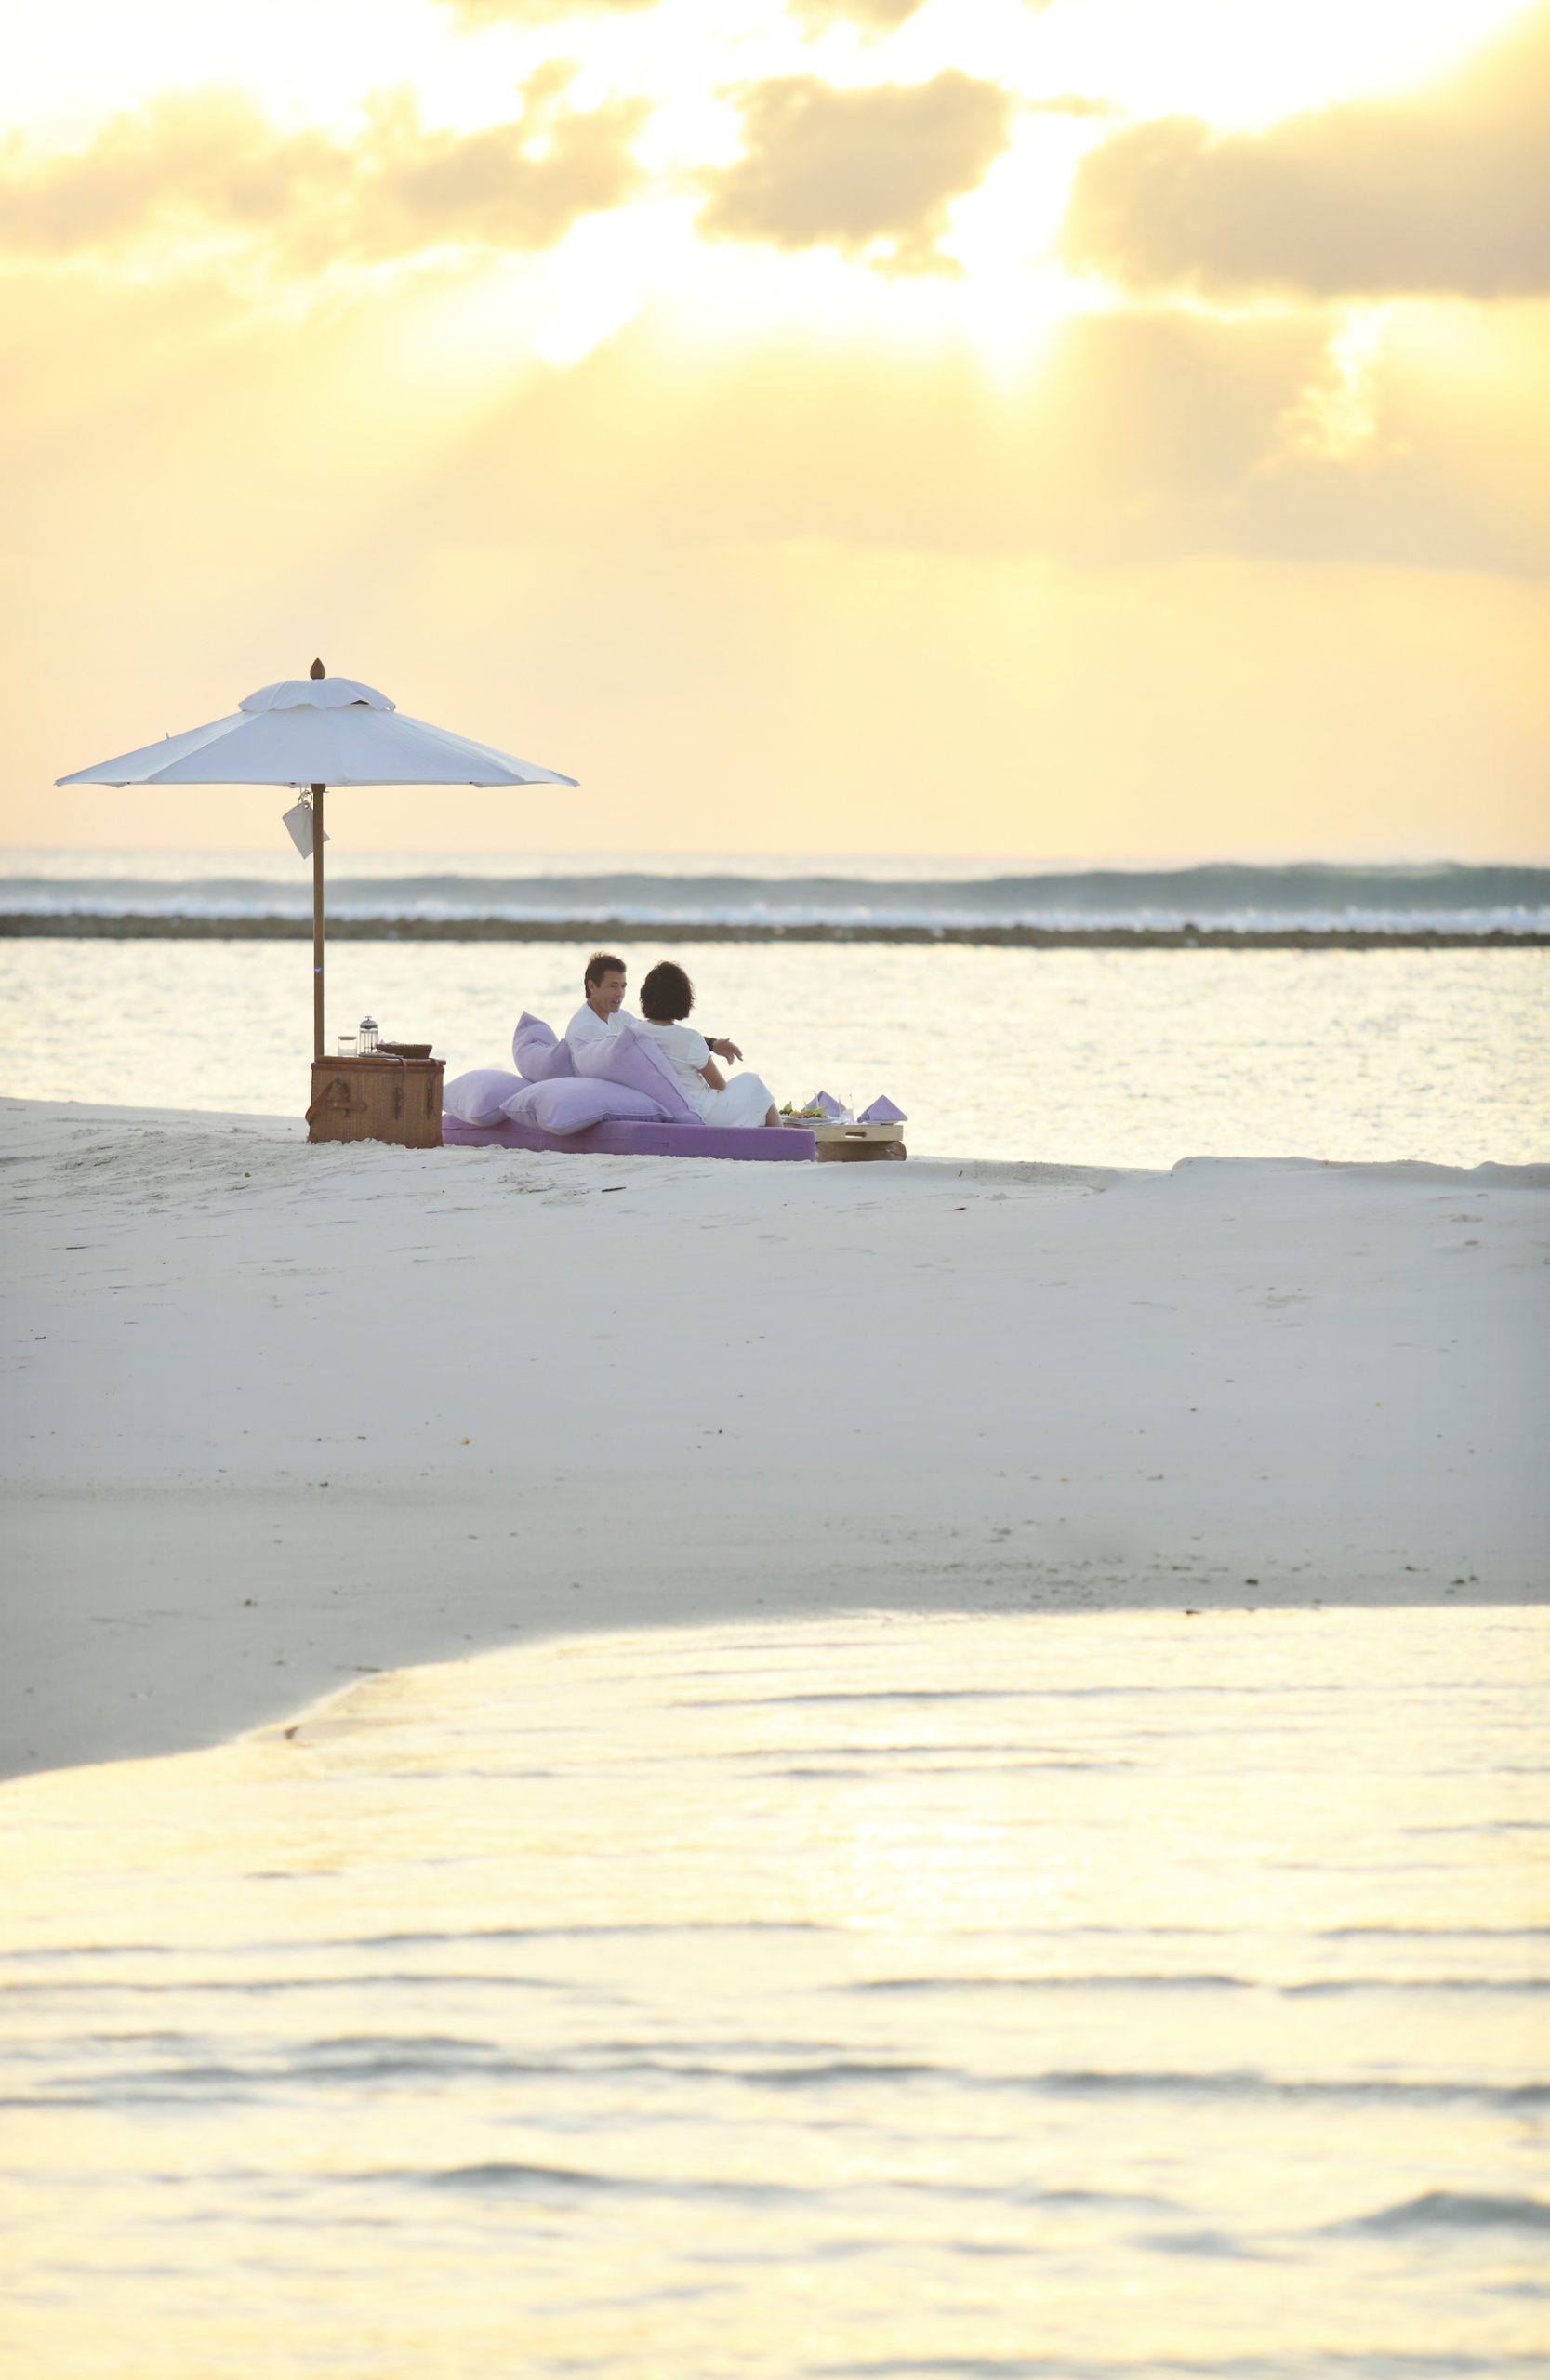 Soneva Jani Resort – Noonu Atoll, Medhufaru, Maldives – Beach Dining Sunset